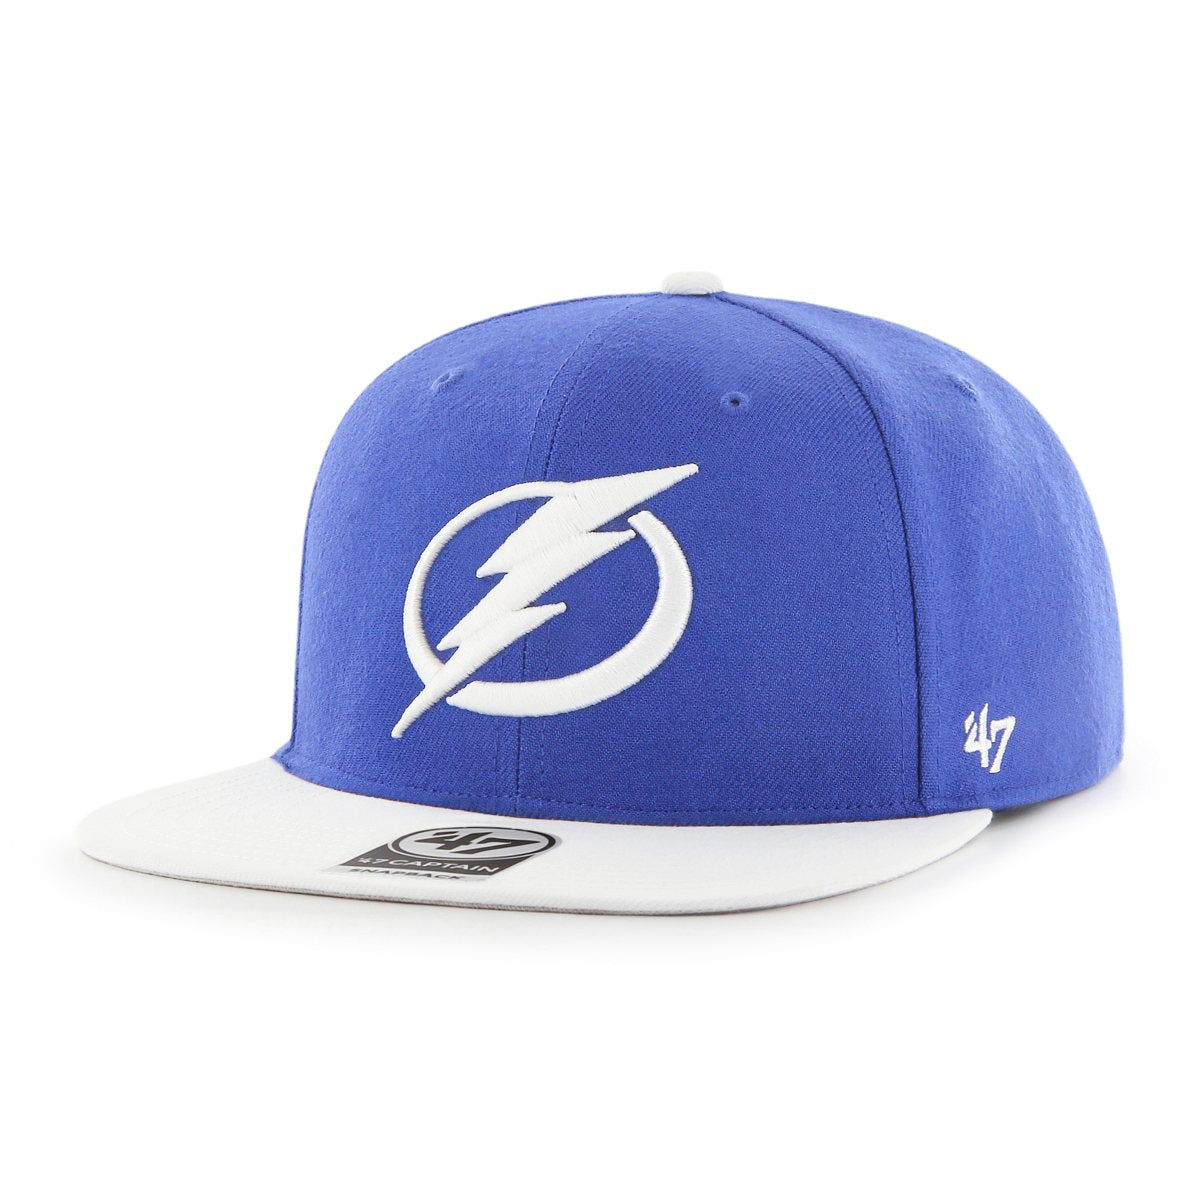 Tampa Bay Lightning '47 Adjustable Snapback No Shot Captain Two Tone Hat